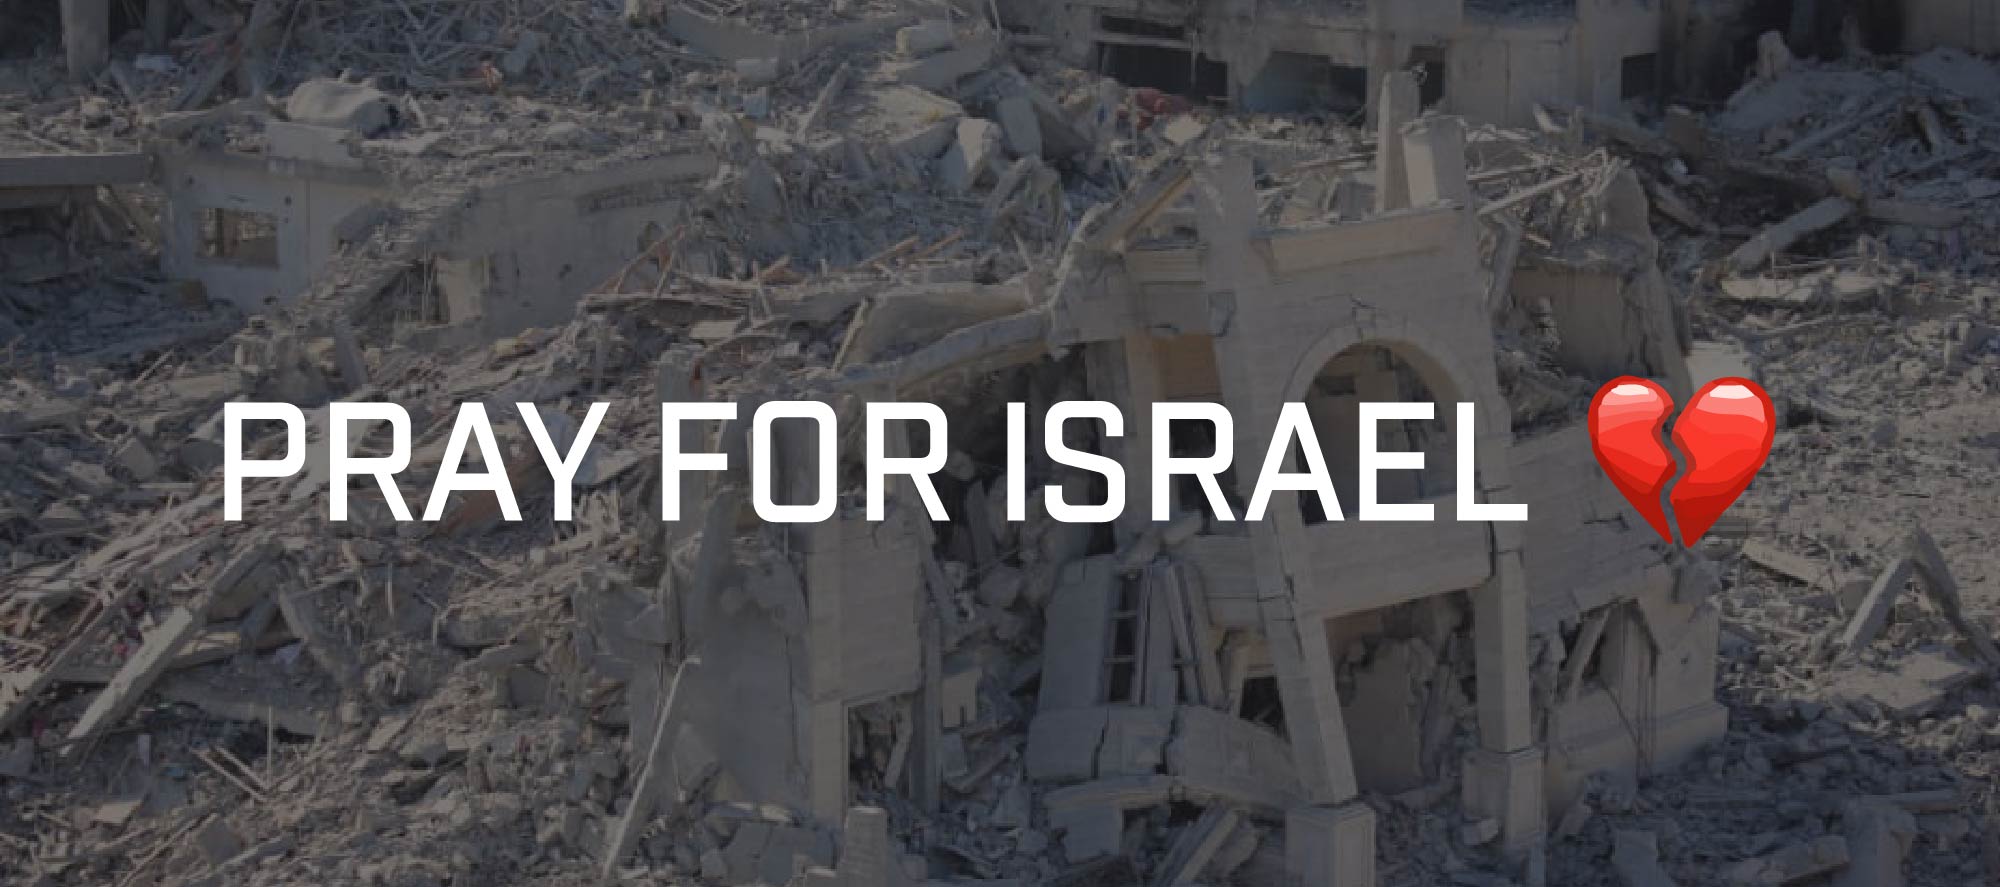 Pray for Israel. 💔